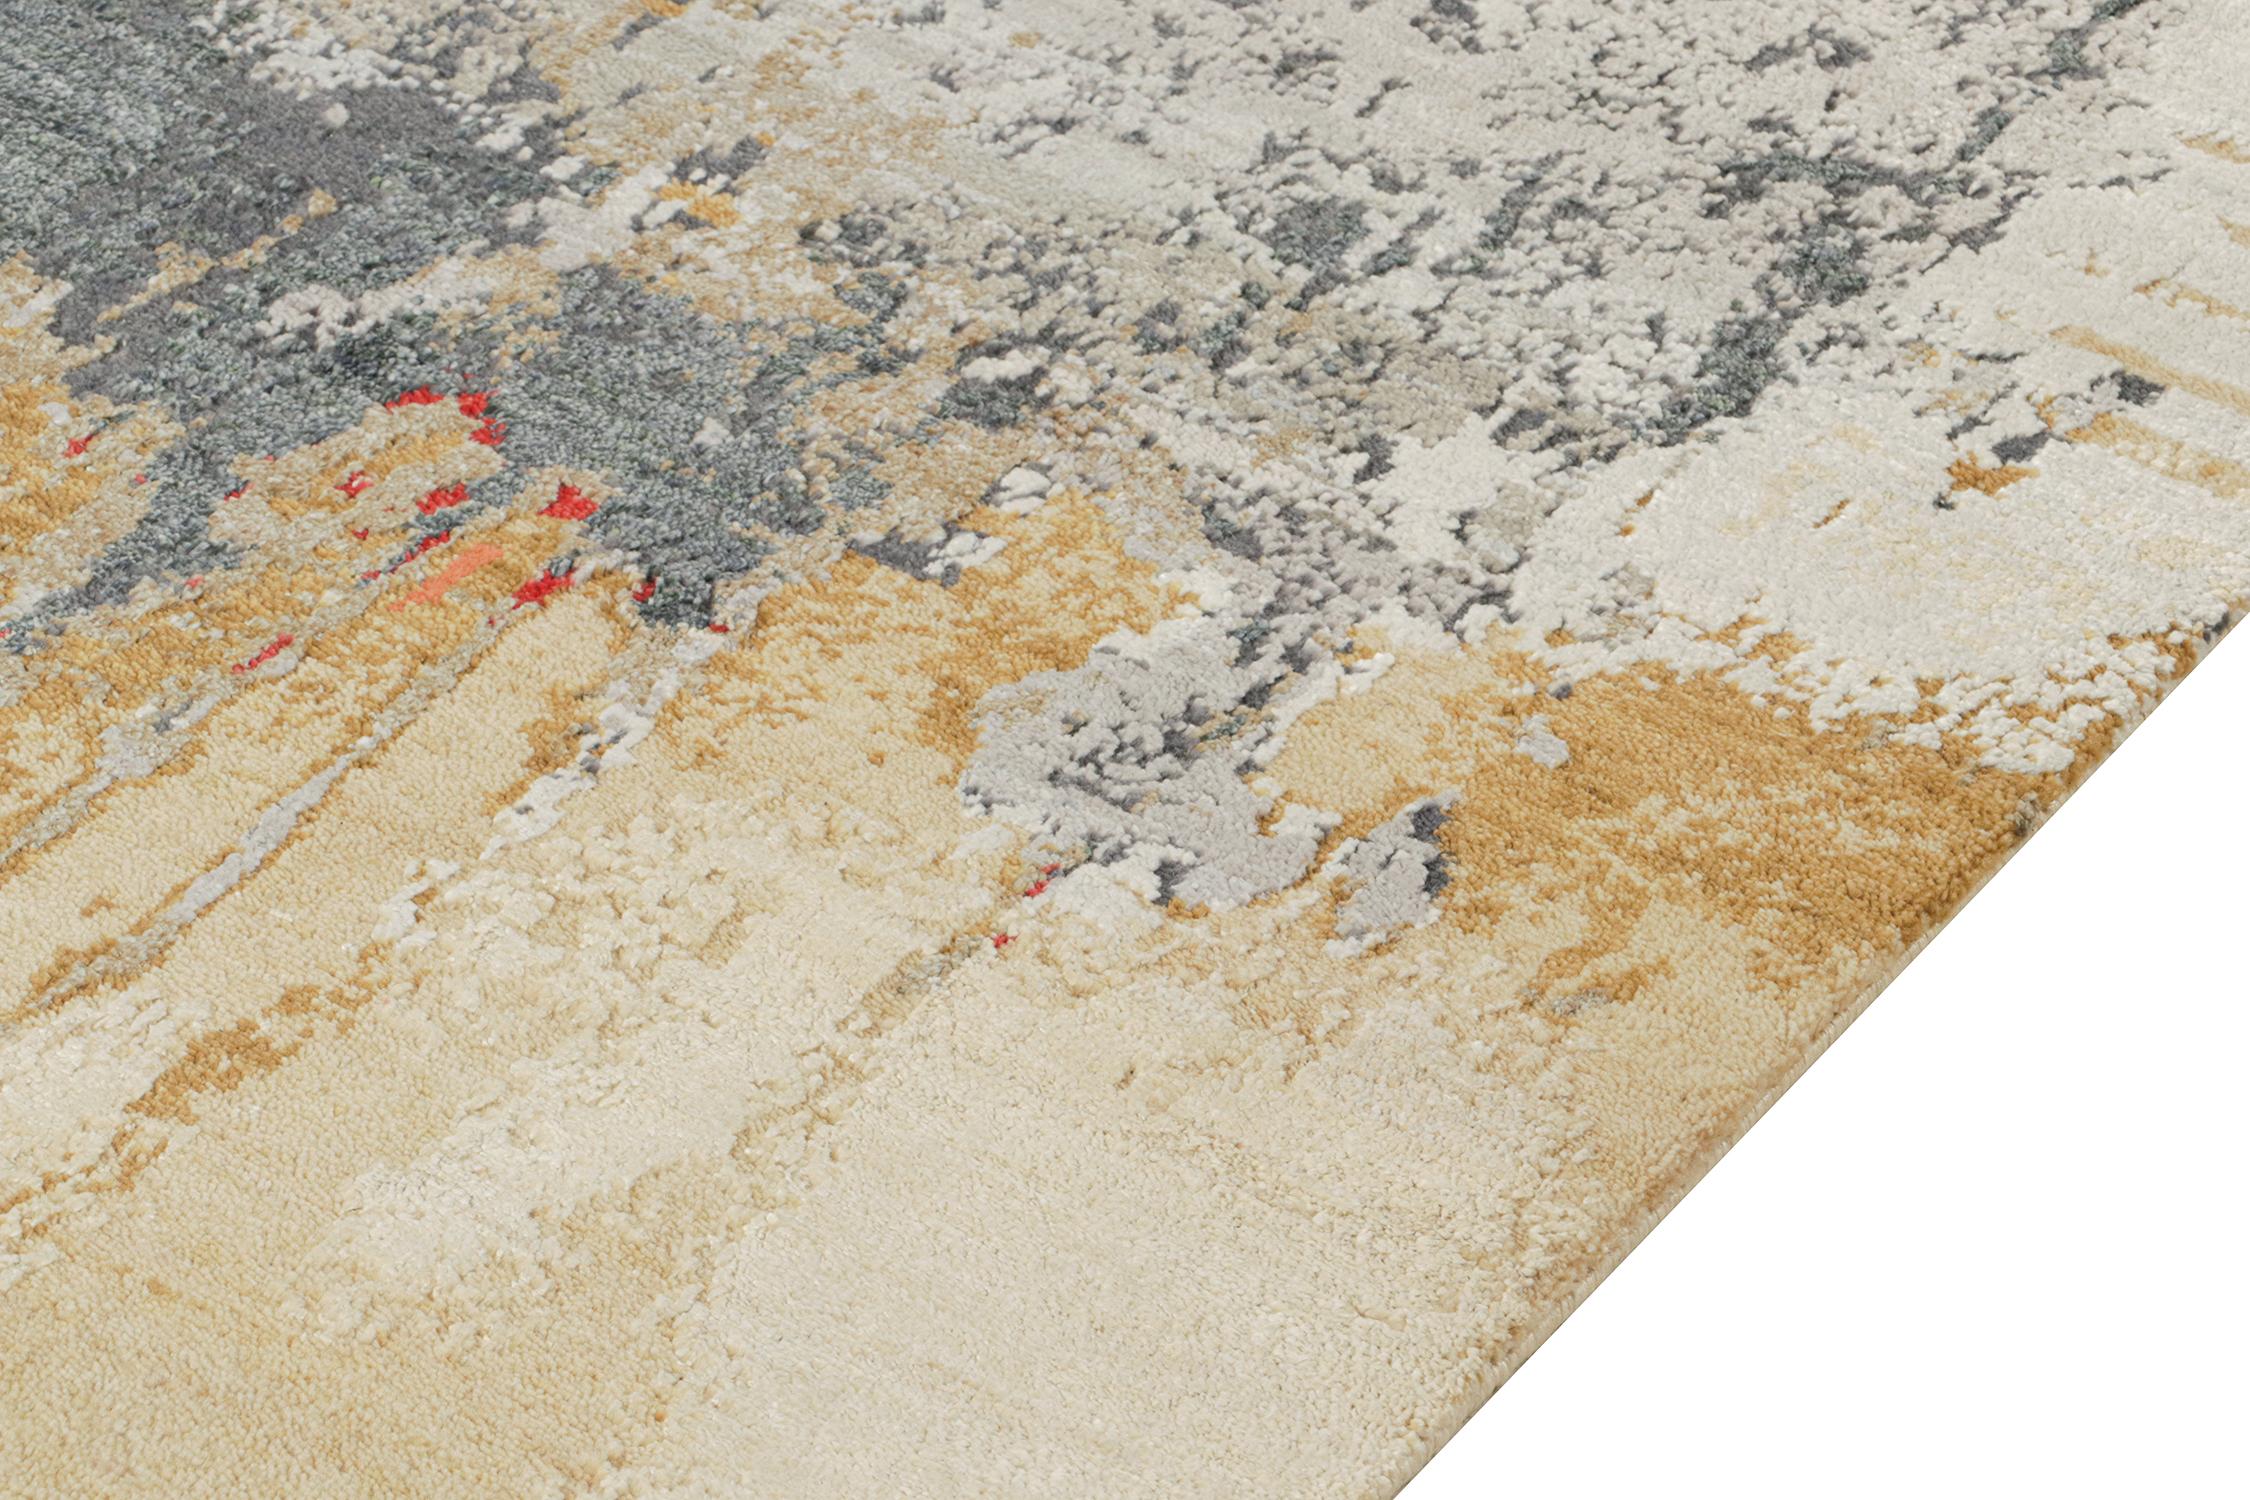 Noué à la main Rug & Kilim's Modern Abstract Rug in Beige-Brown, Gray and Red (tapis abstrait moderne en beige, gris et rouge) en vente